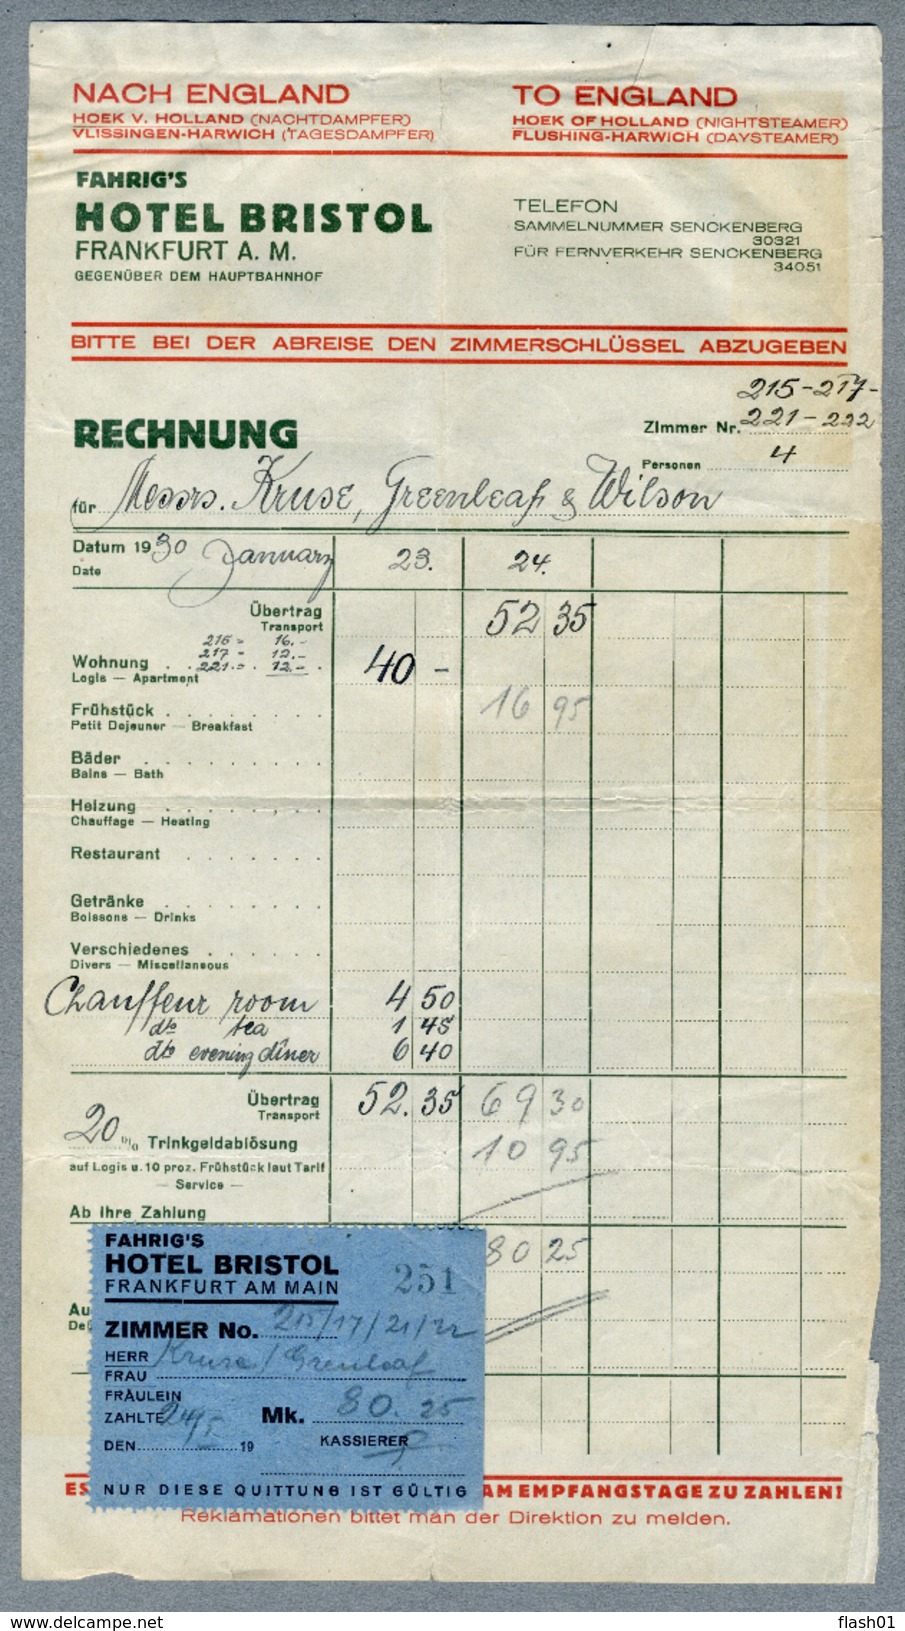 Invoice Receipt Hotel Bristol, Frankfurt, Germany 1930 - 1900 – 1949